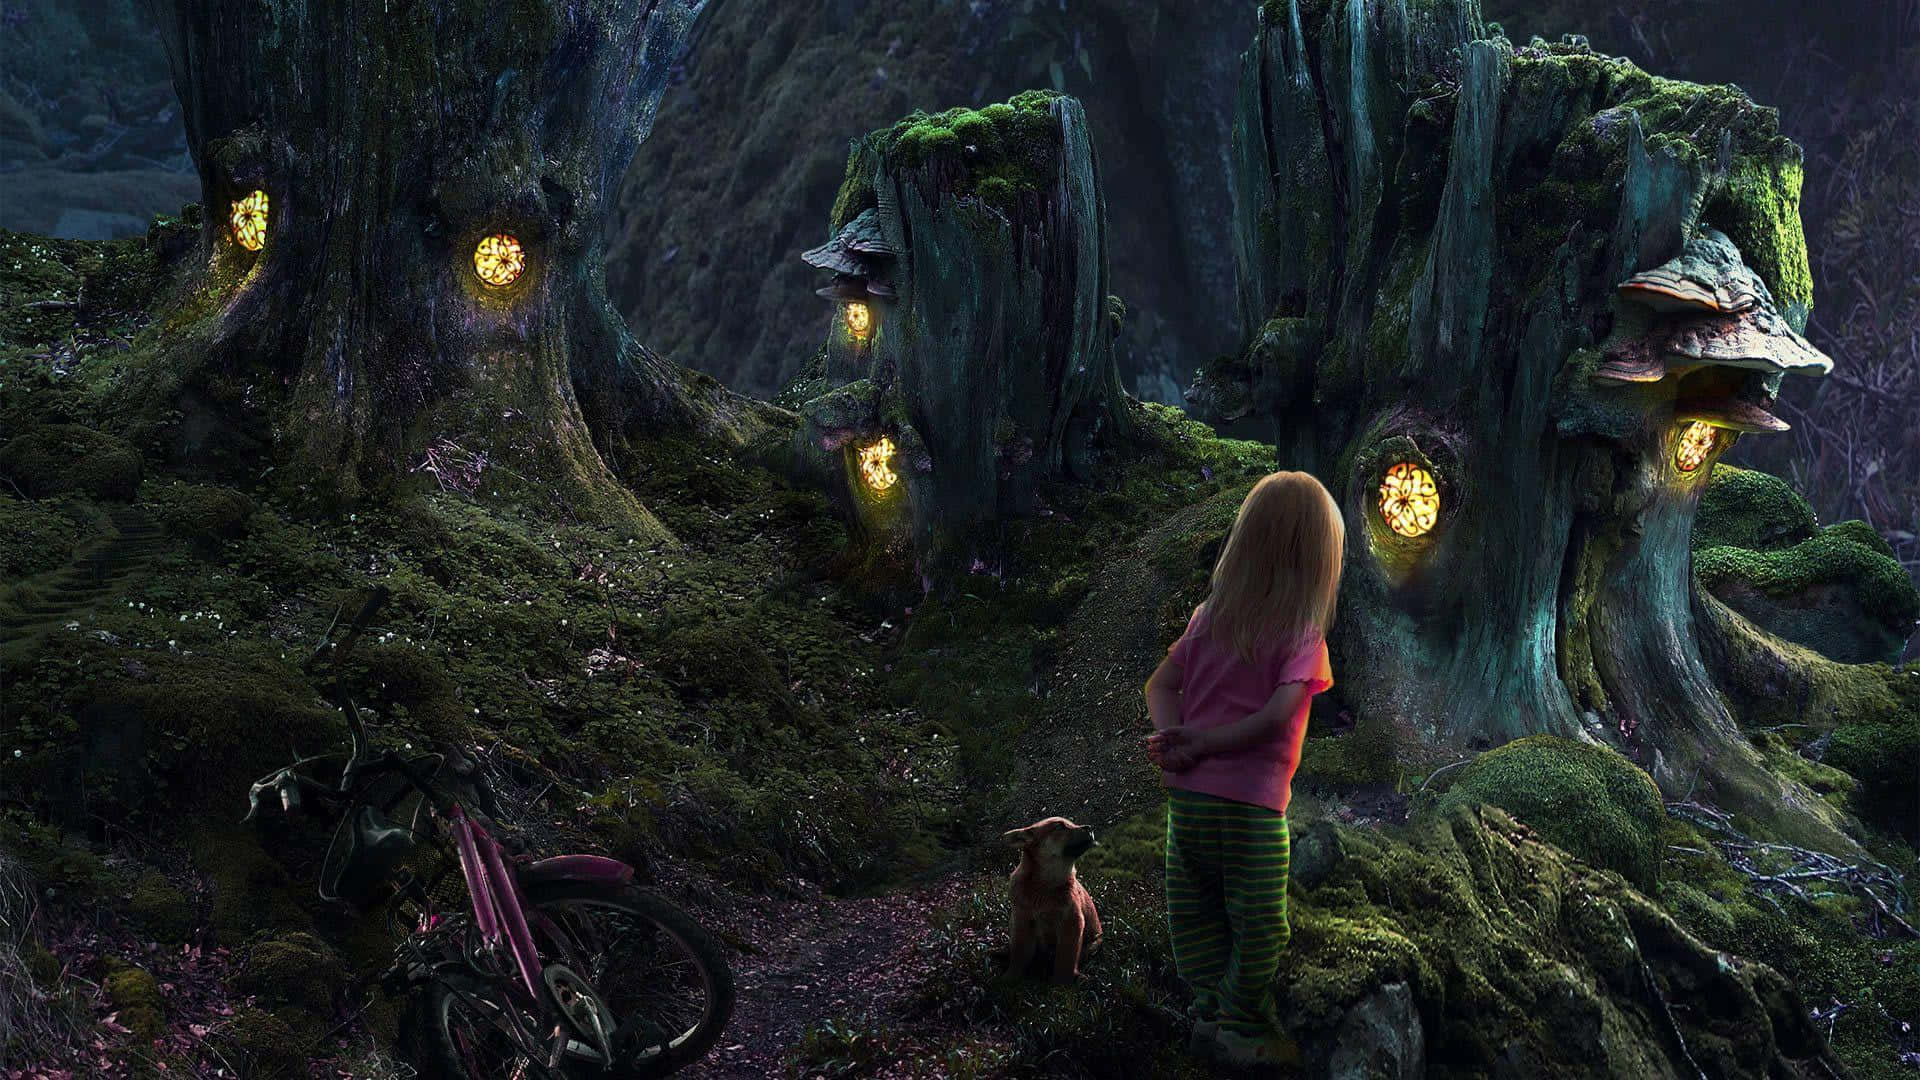 Mysterious Forest Elf: A 3D Fantasy Adventure Wallpaper